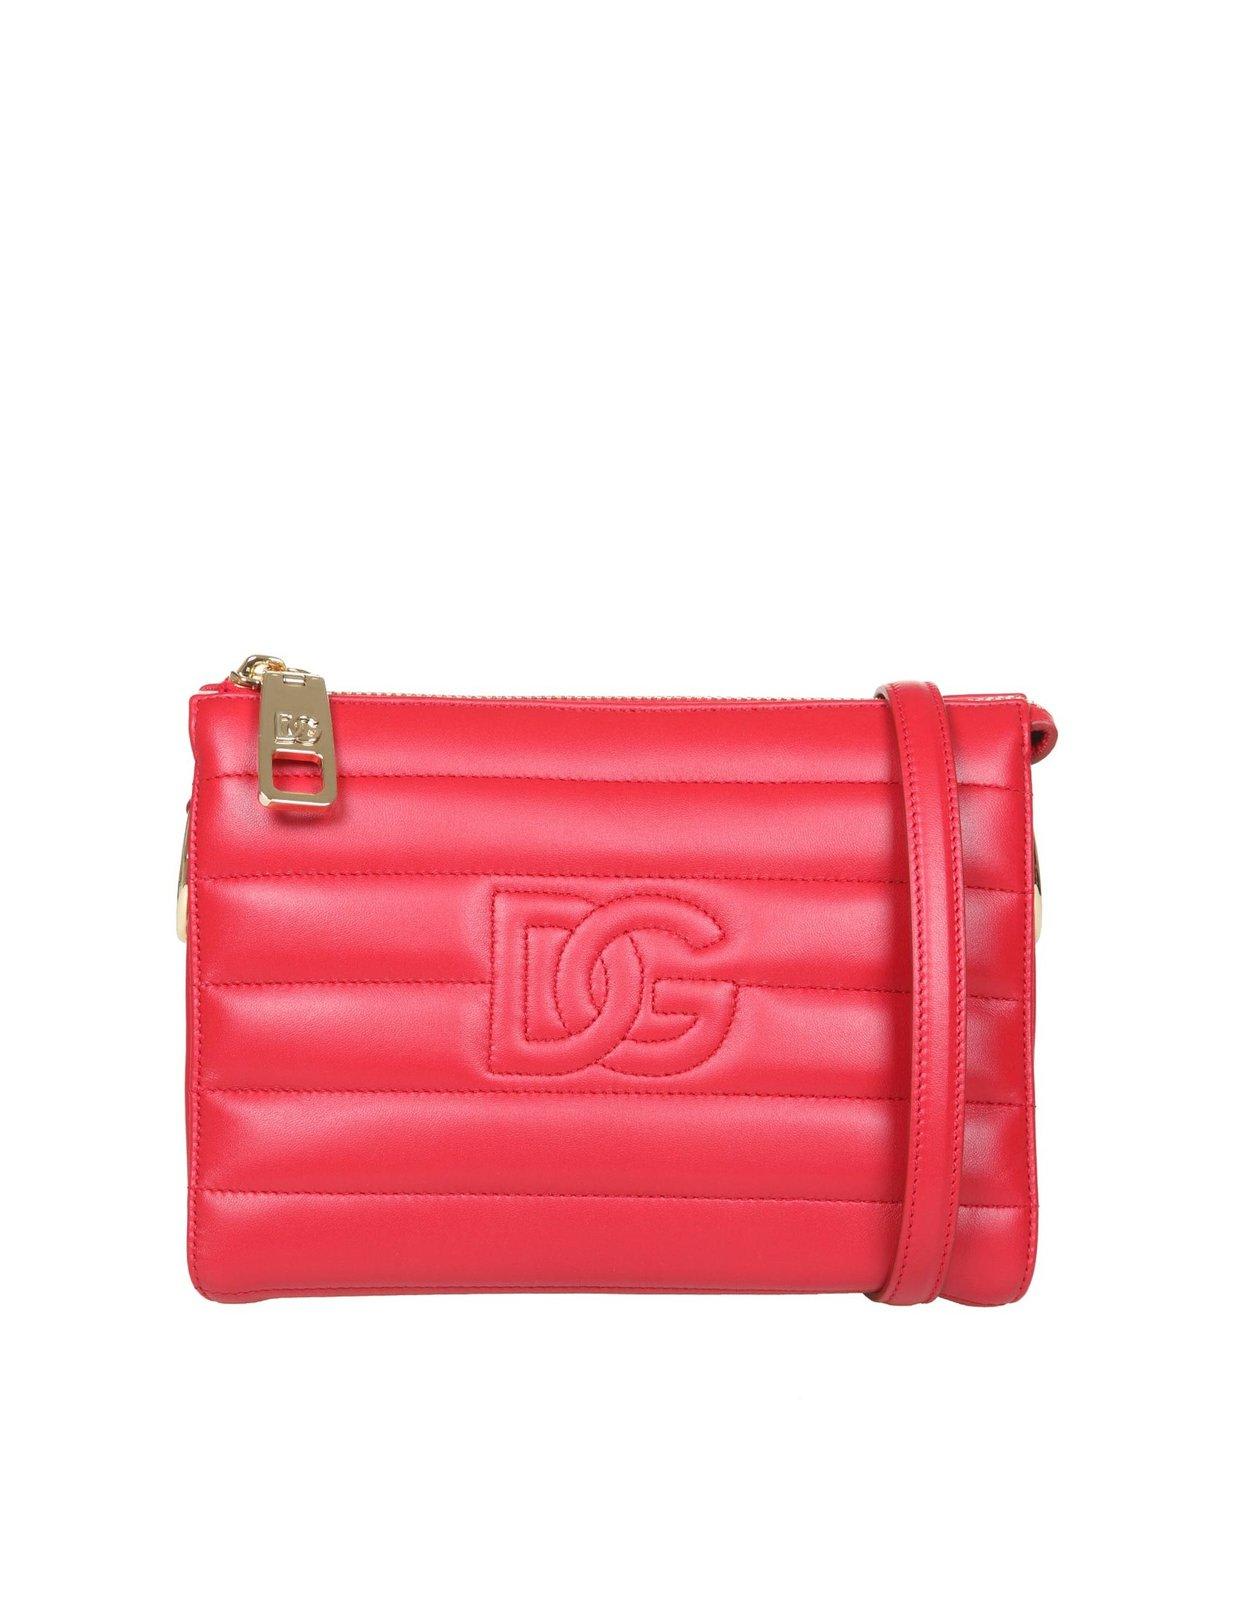 Dolce && Gabbana Medium Quilted Tris Bag